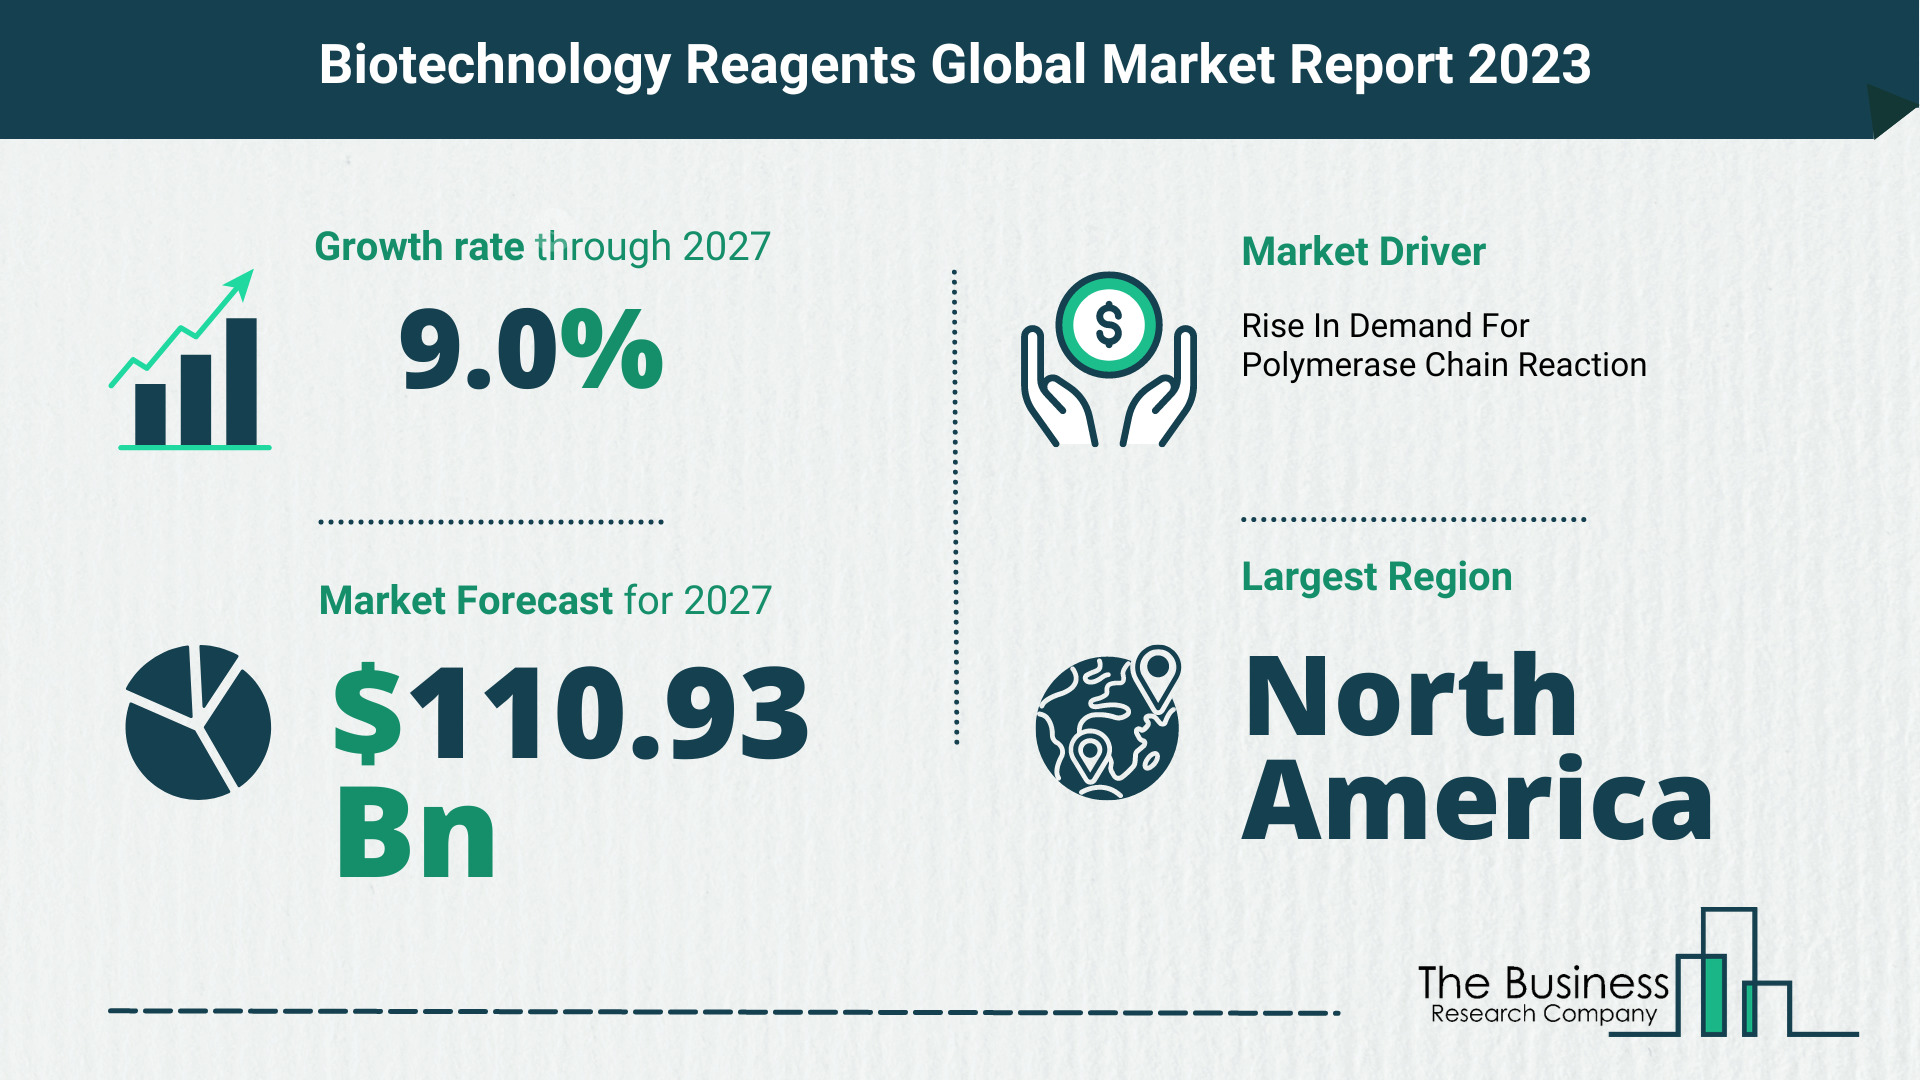 Global Biotechnology Reagents Market